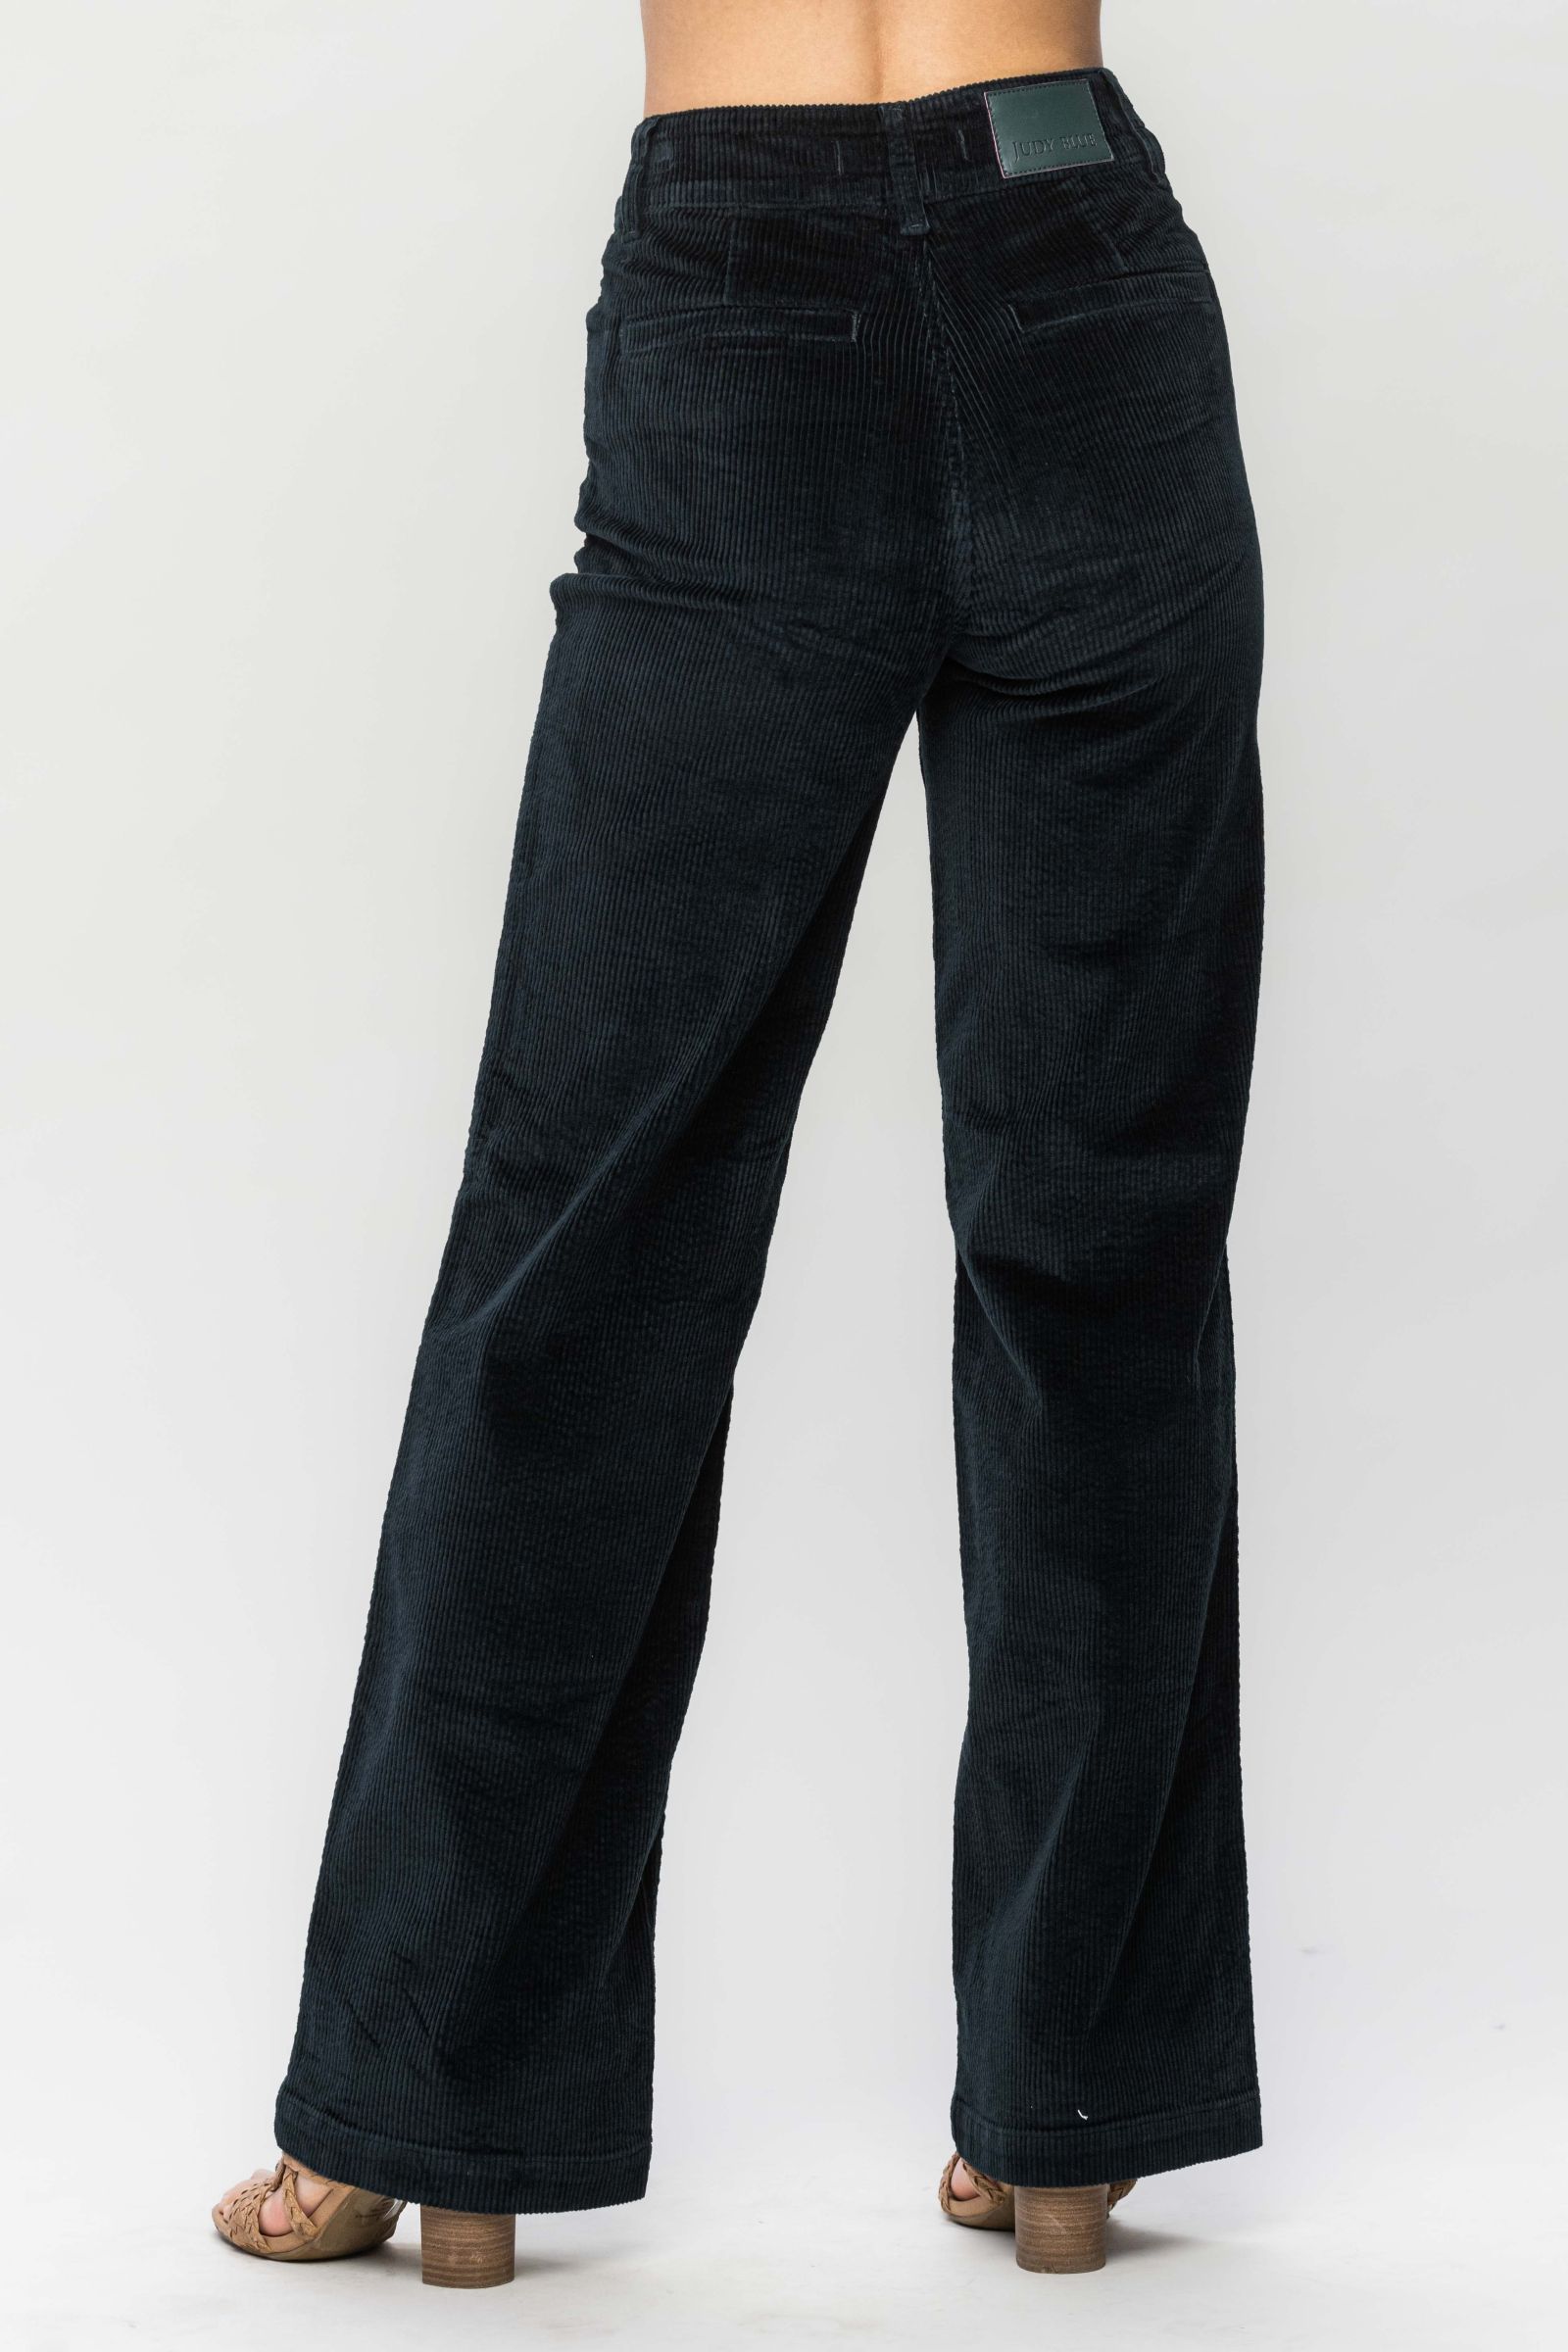 Judy Blue Jeans 88654